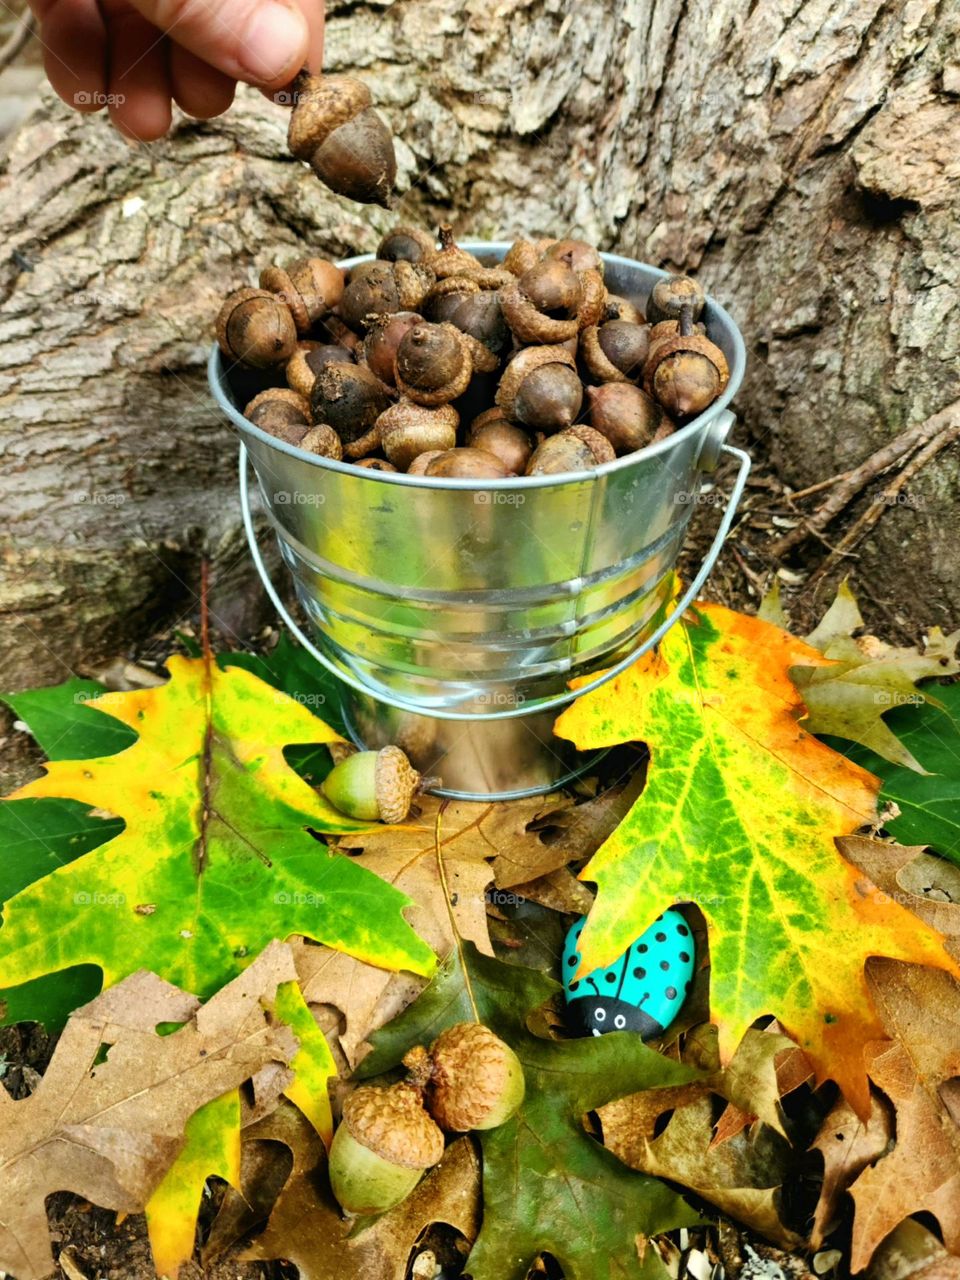 Collecting acorns